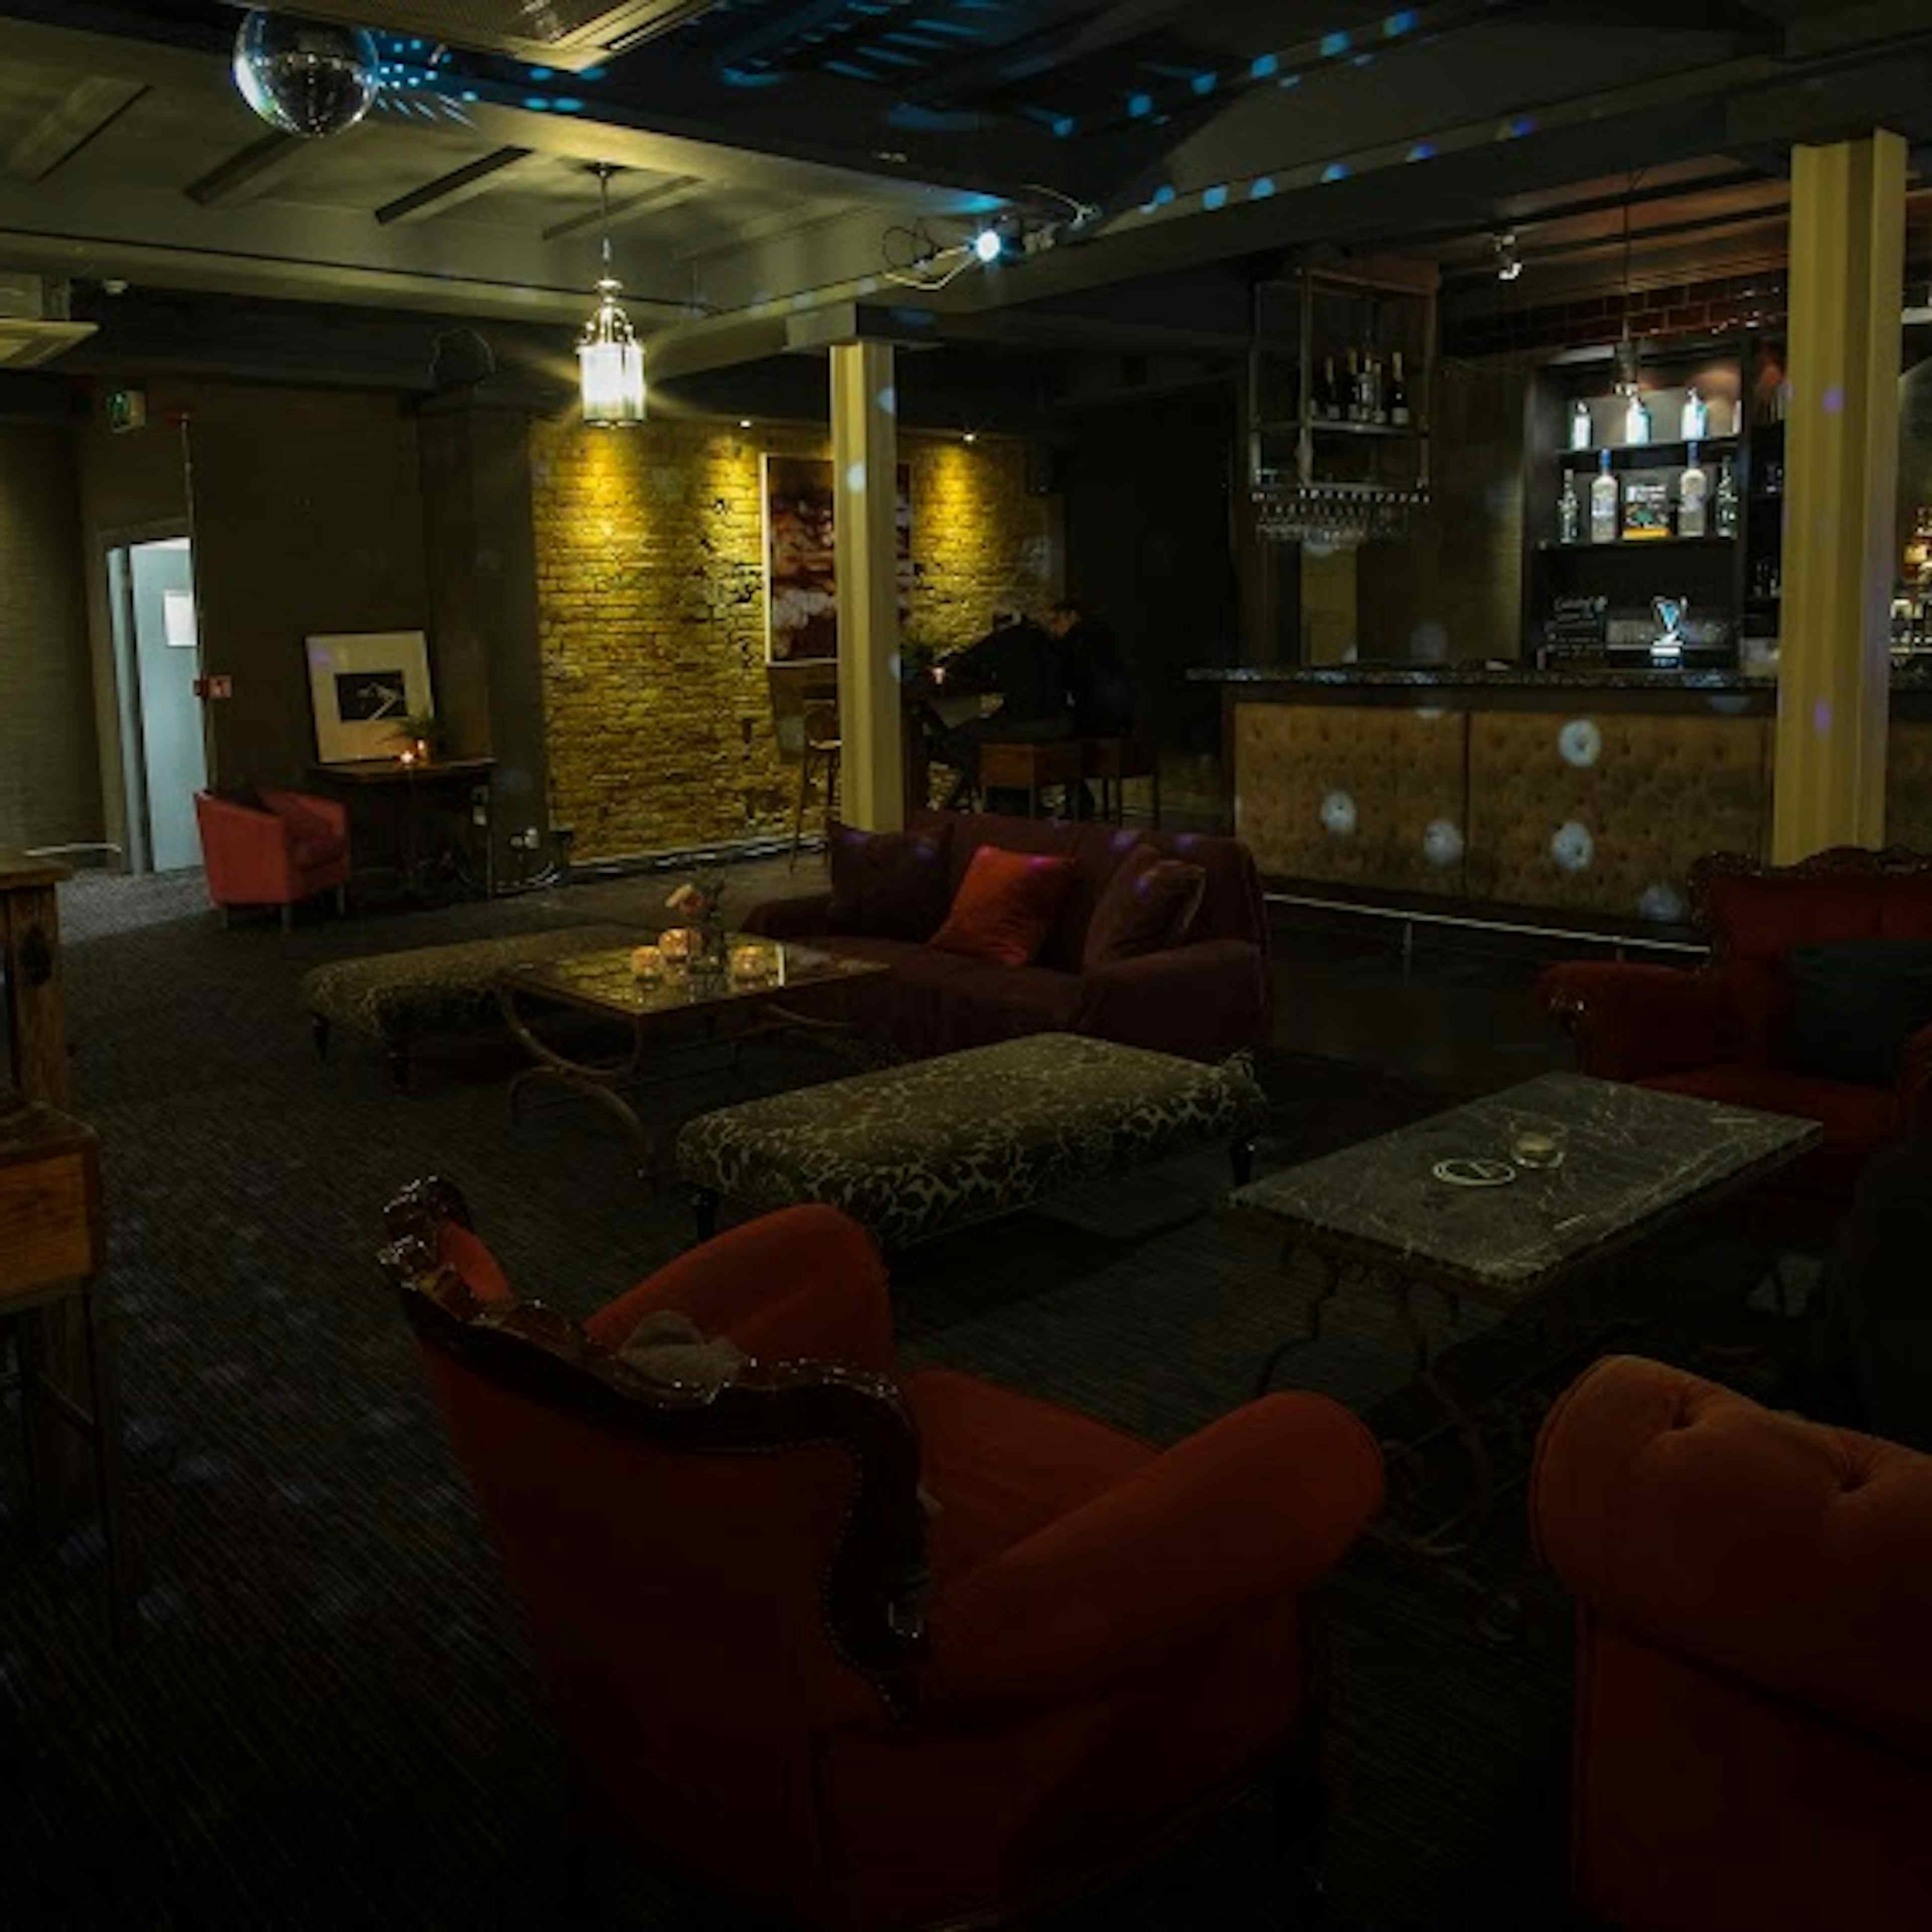 Broadway Bar (Fulham) - 1st Floor Lounge Area image 3